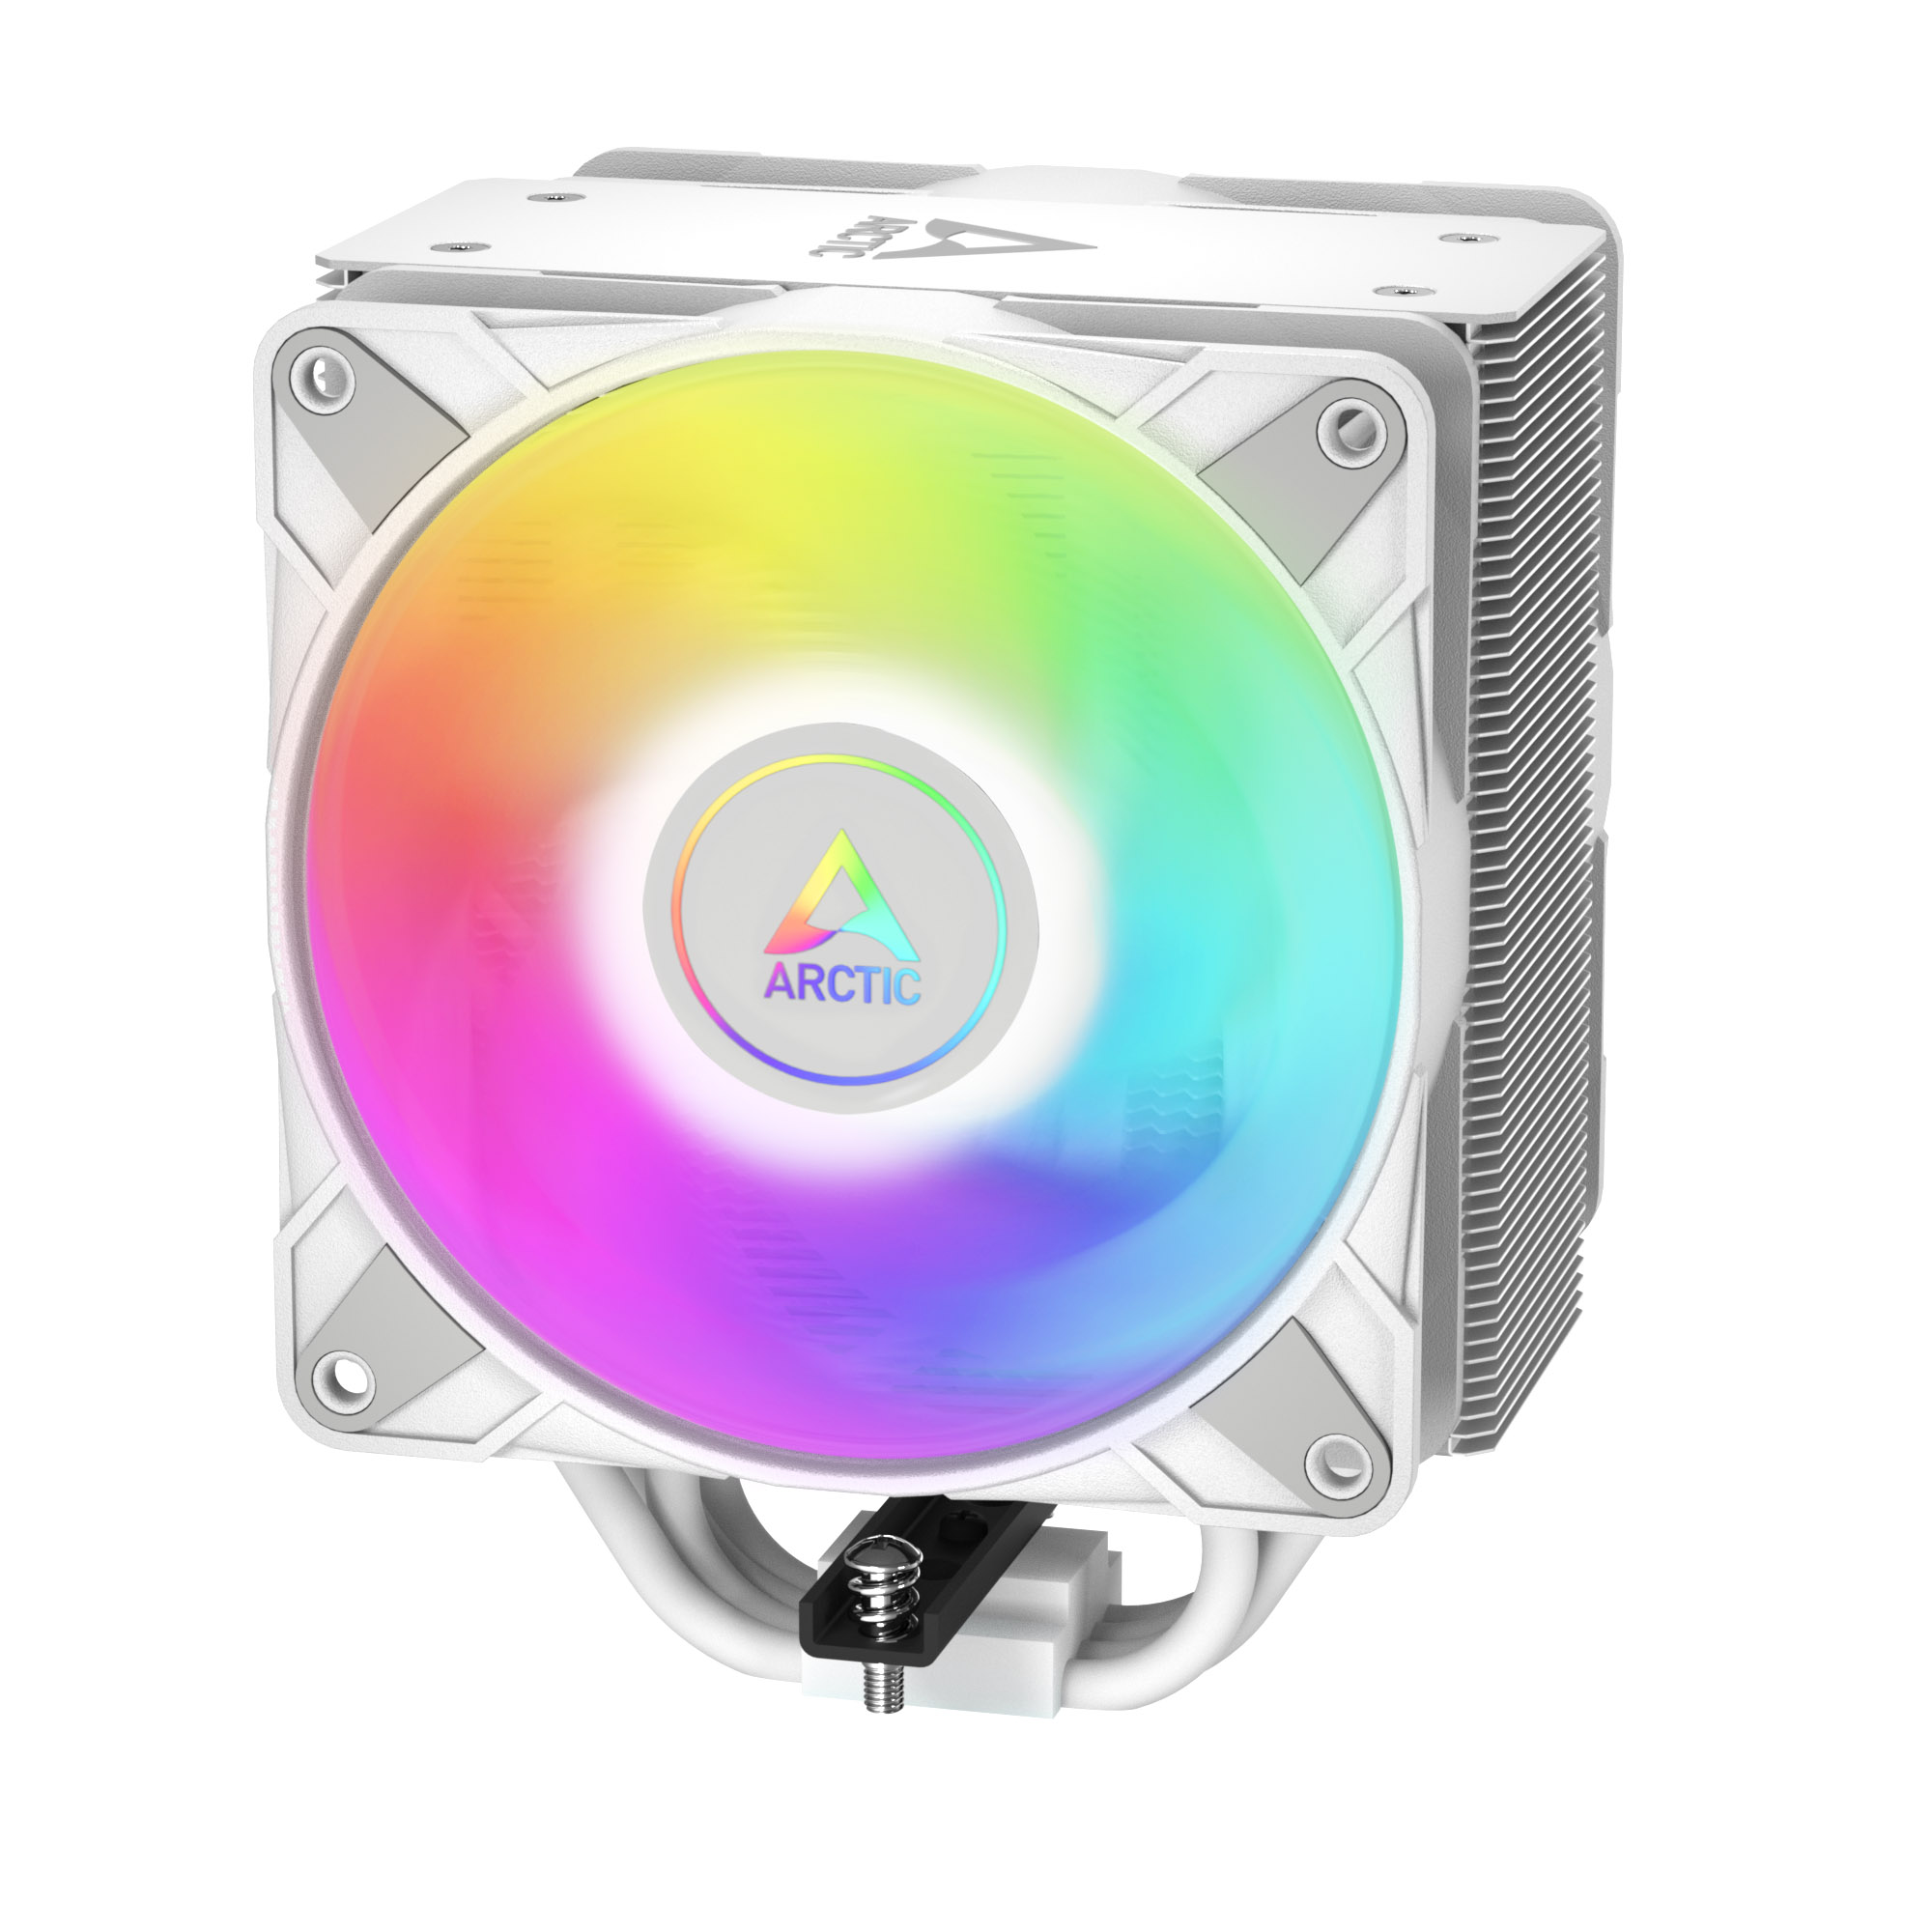 ARCTIC Freezer 36 A-RGB (White) – White CPU Cooler for Intel Socket LG